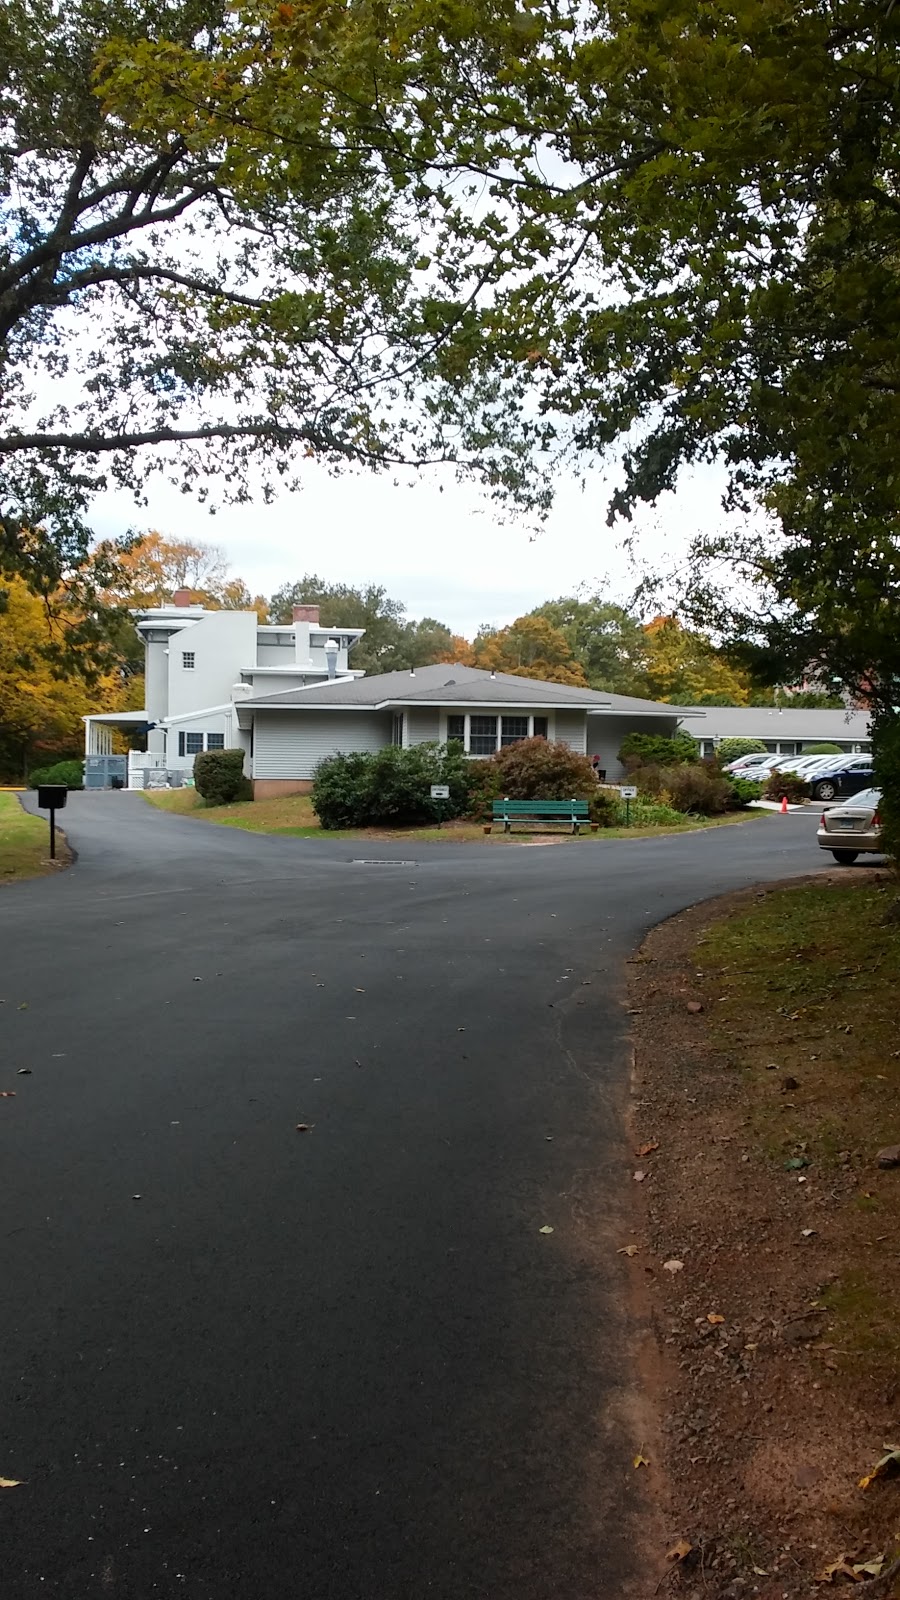 Greystone Retirement Home | 44 High St, Portland, CT 06480 | Phone: (860) 342-2509